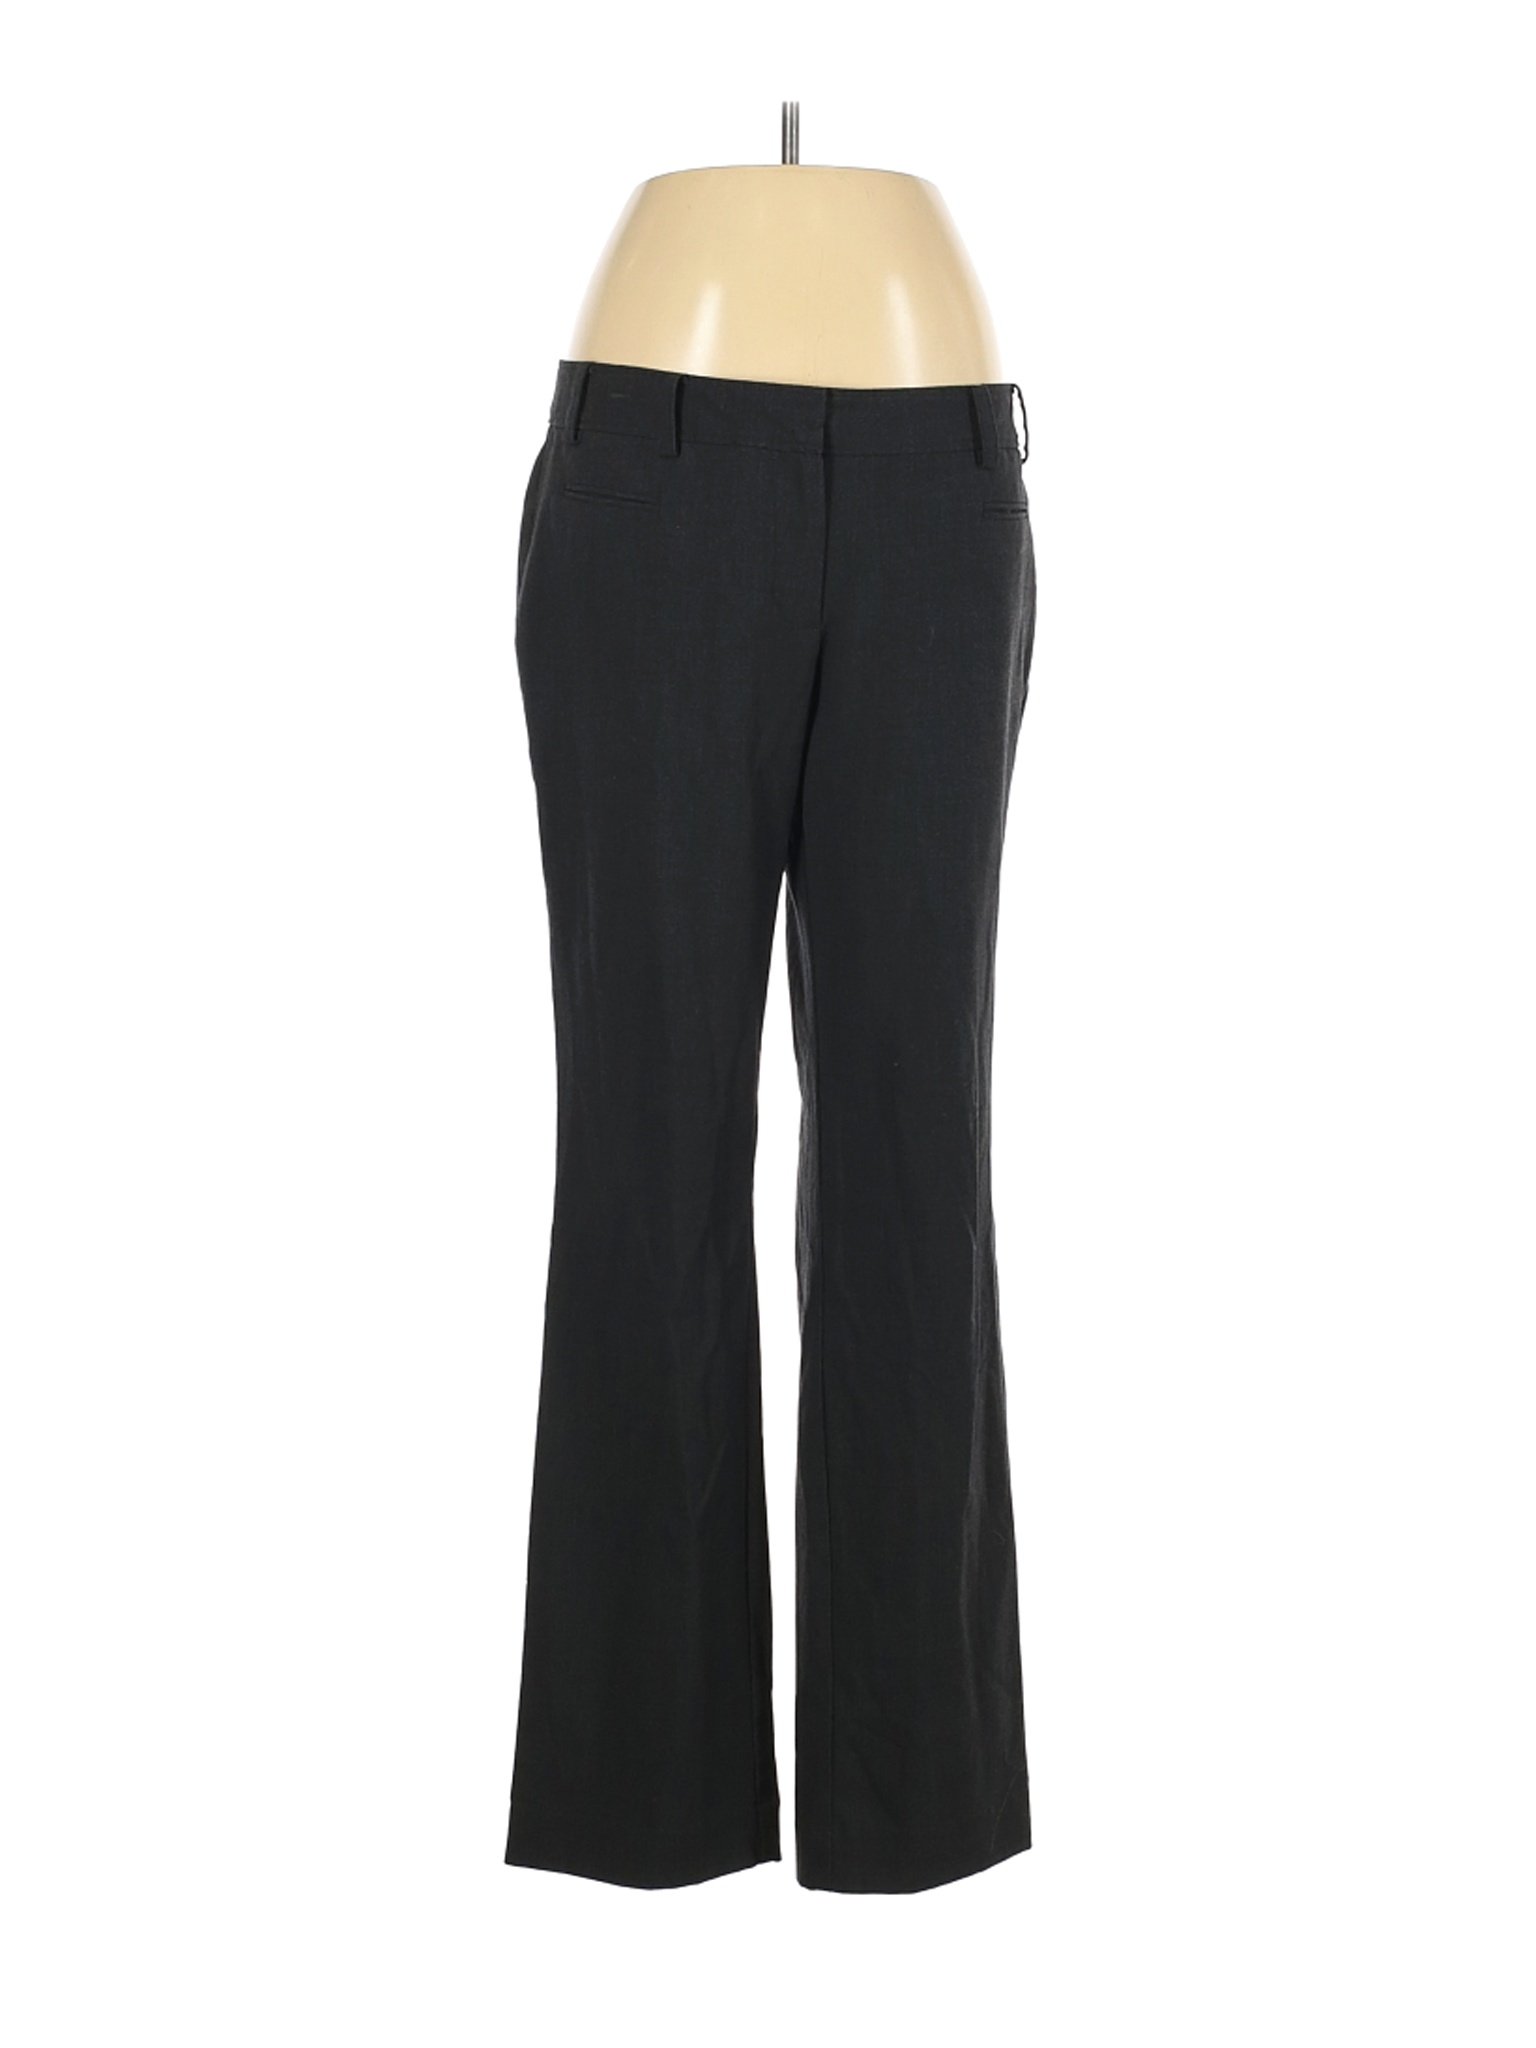 Ann Taylor LOFT Outlet Women Black Casual Pants 10 | eBay